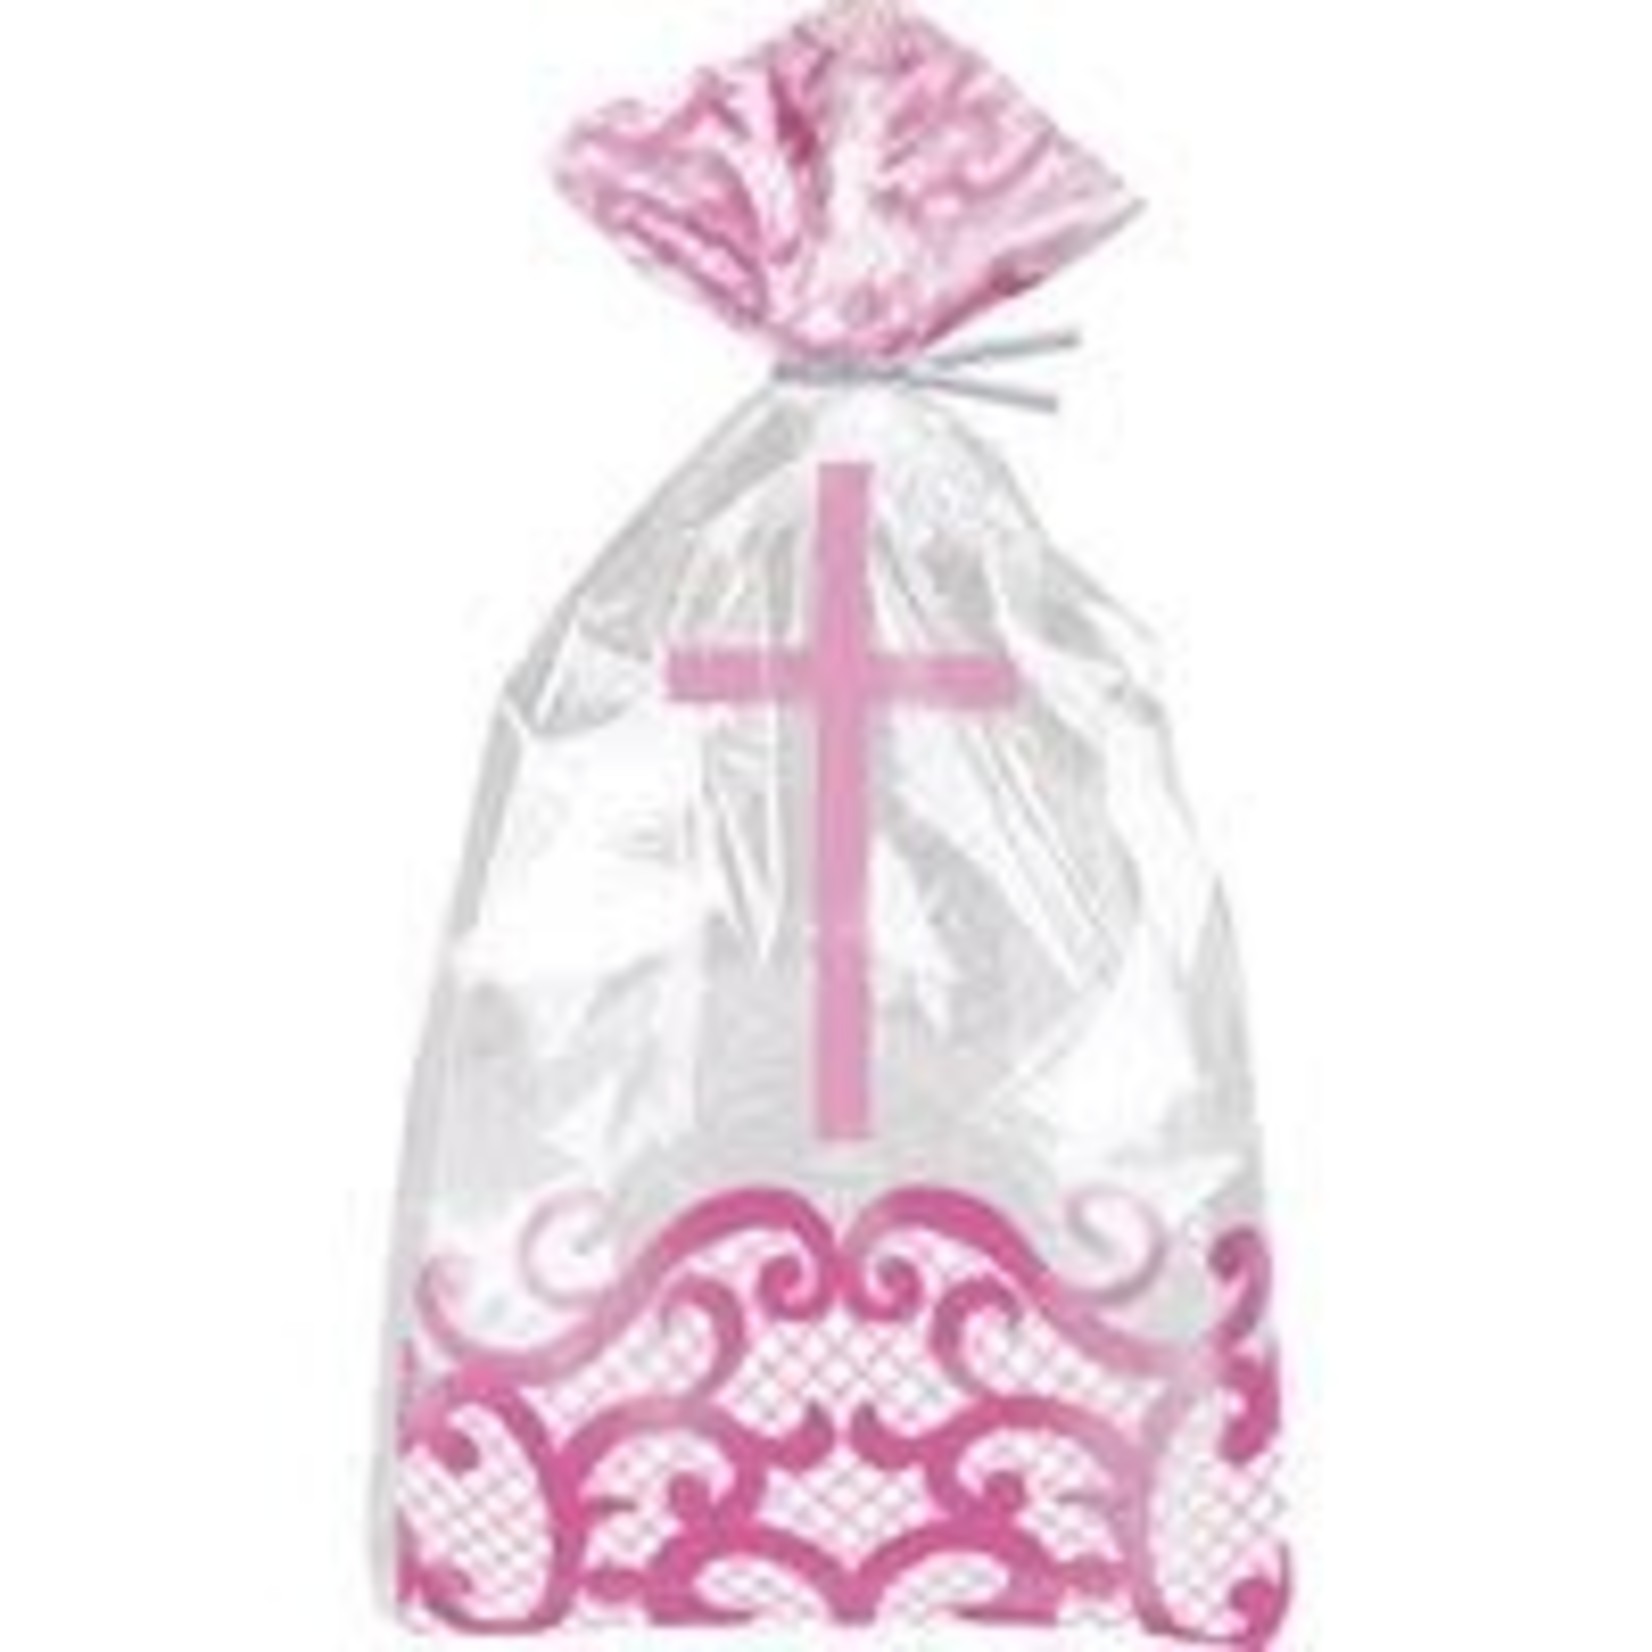 unique Fancy Pink Cross Large Cello Bags w/ Ties - 20ct.